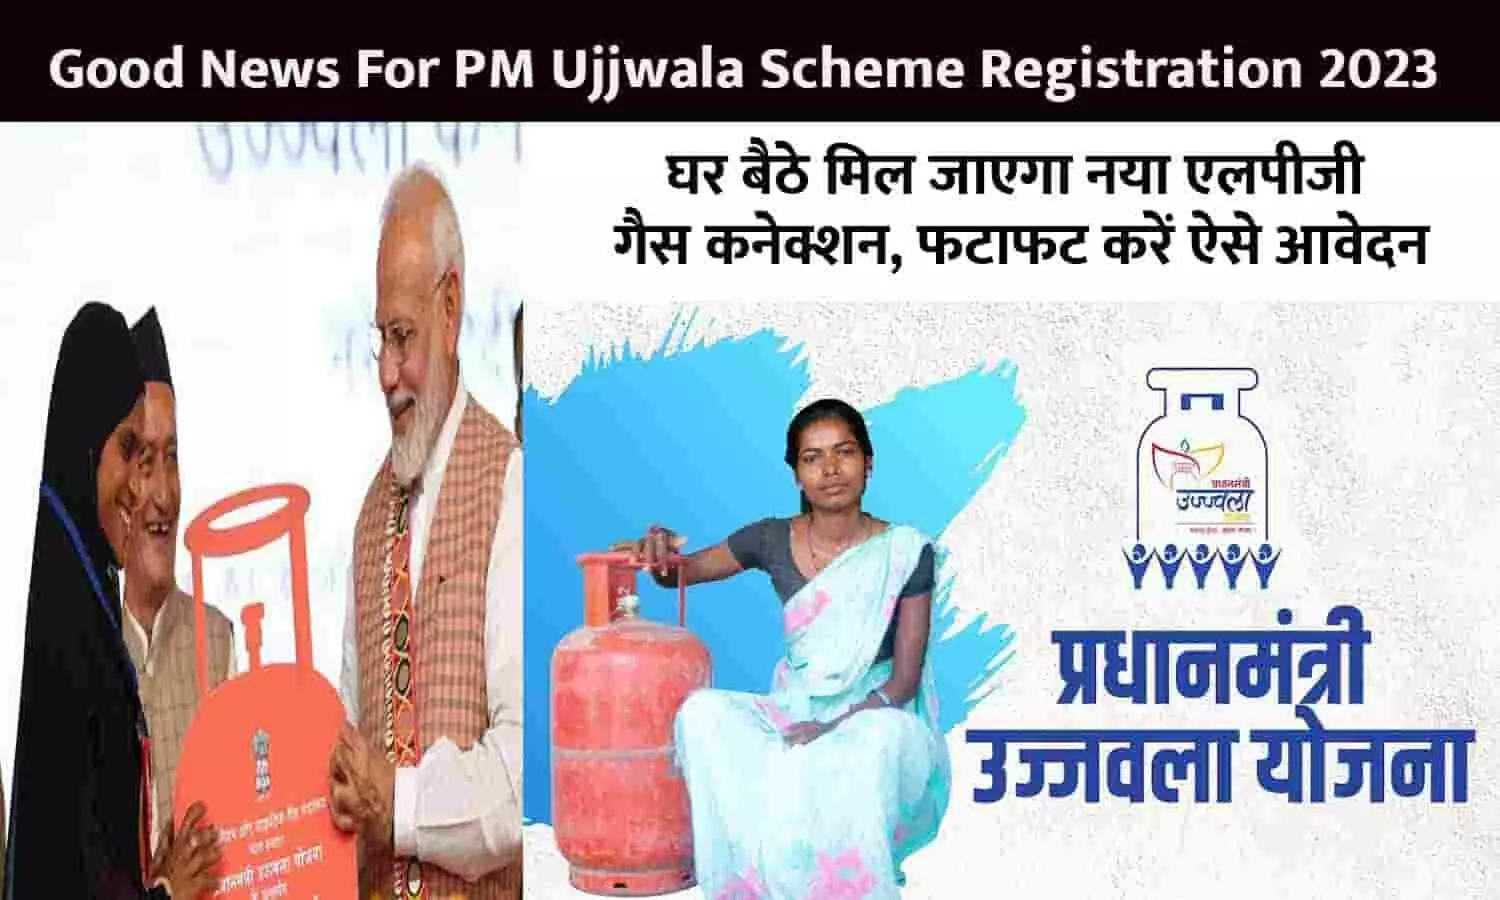 Good News For PM Ujjwala Scheme Registration 2023: घर बैठे मिल जाएगा नया एलपीजी गैस कनेक्शन, फटाफट करें ऐसे आवेदन